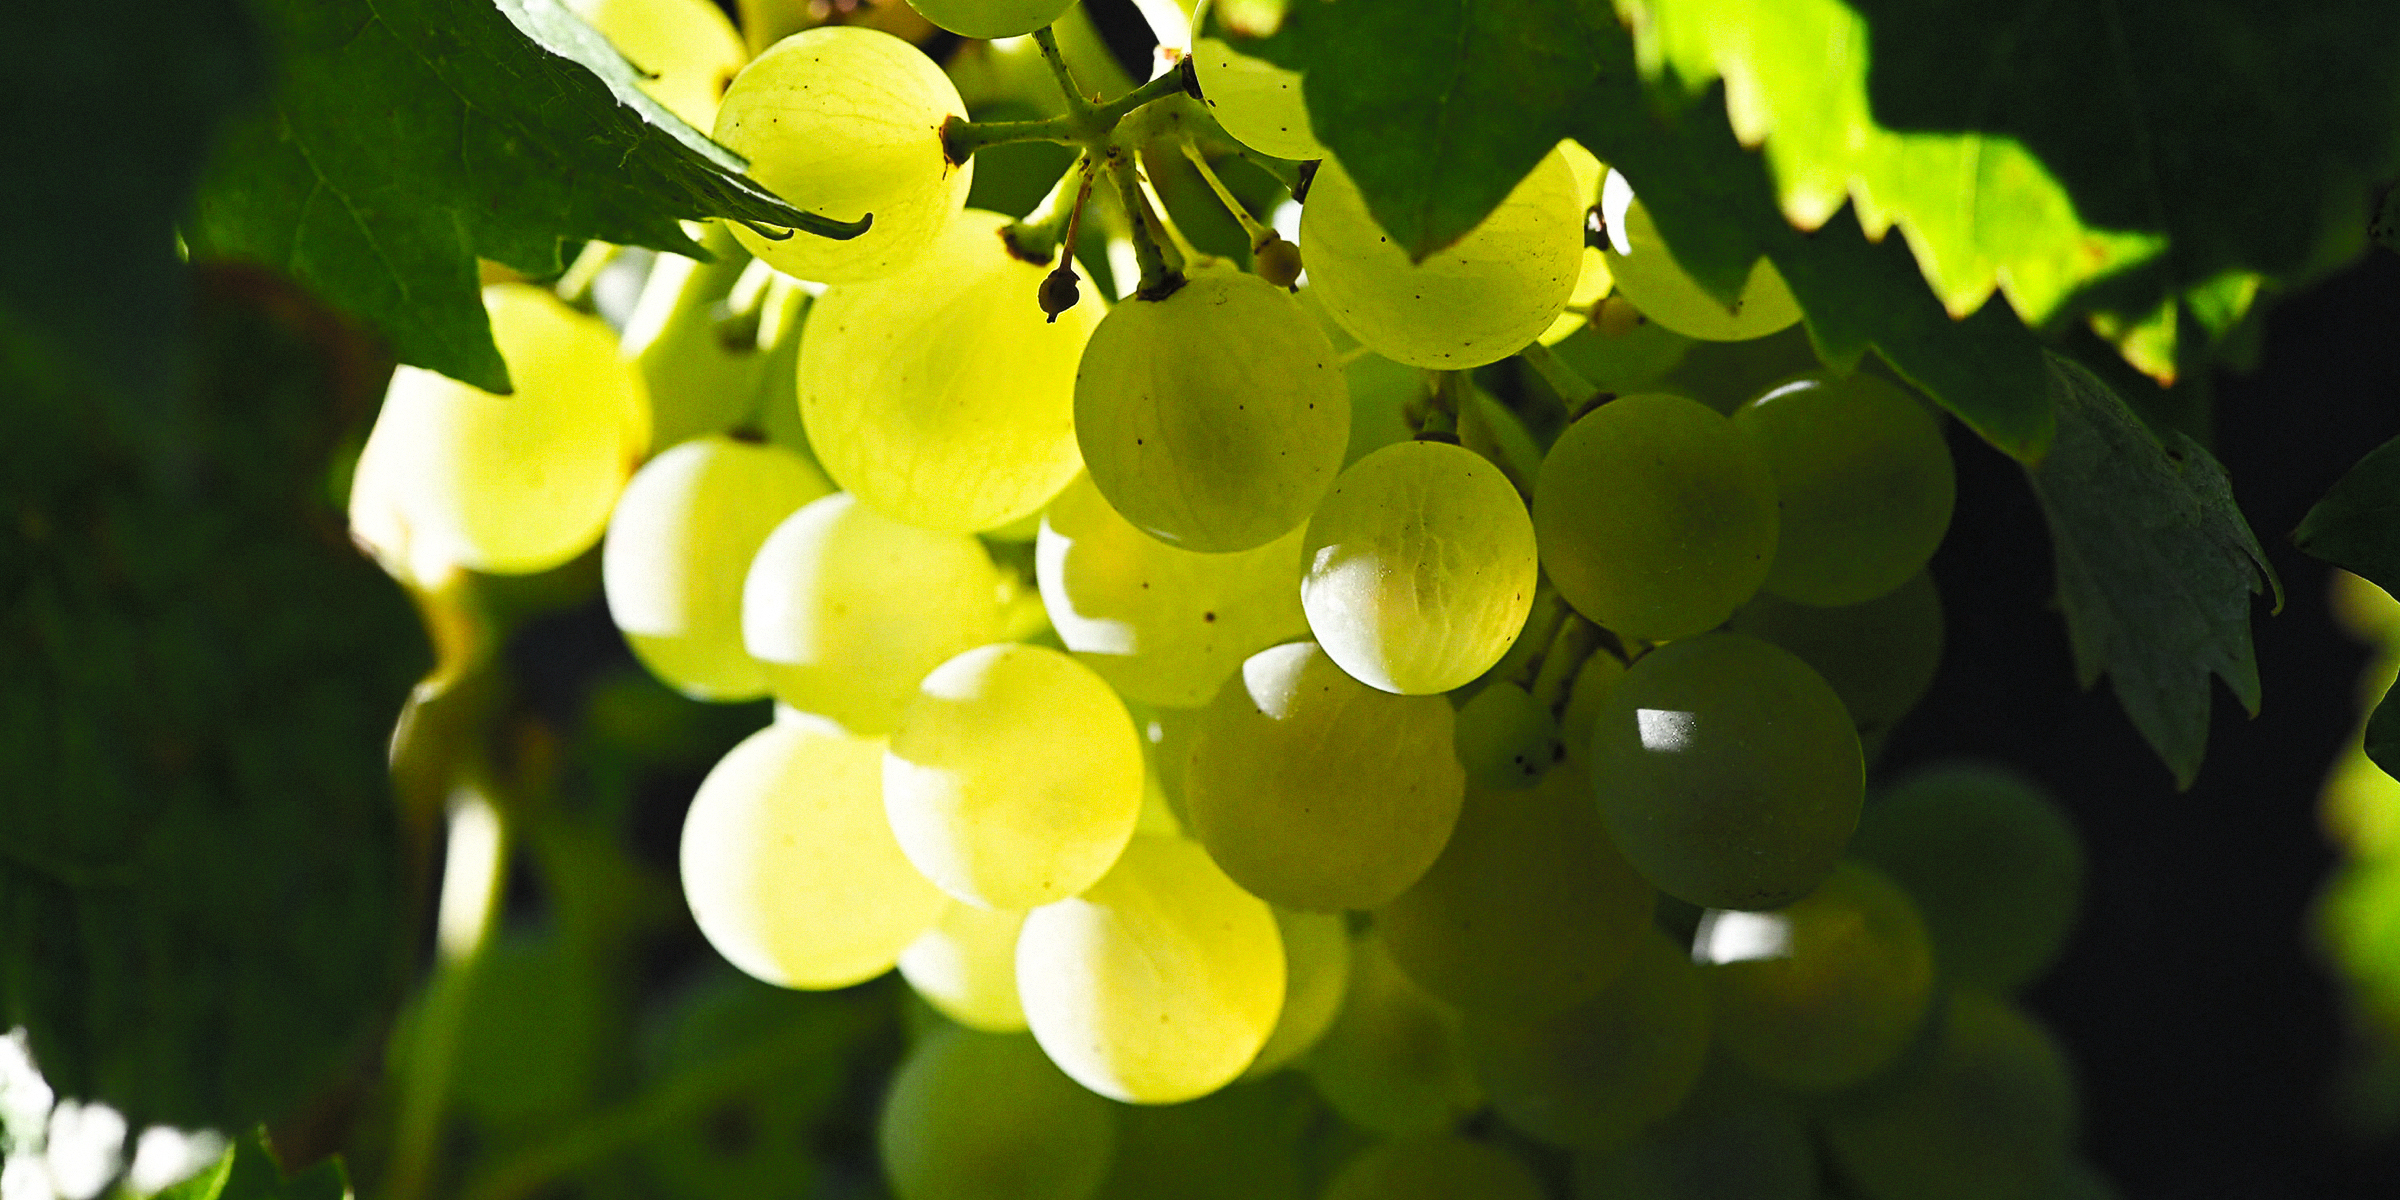 Grapes | Source: Shutterstock